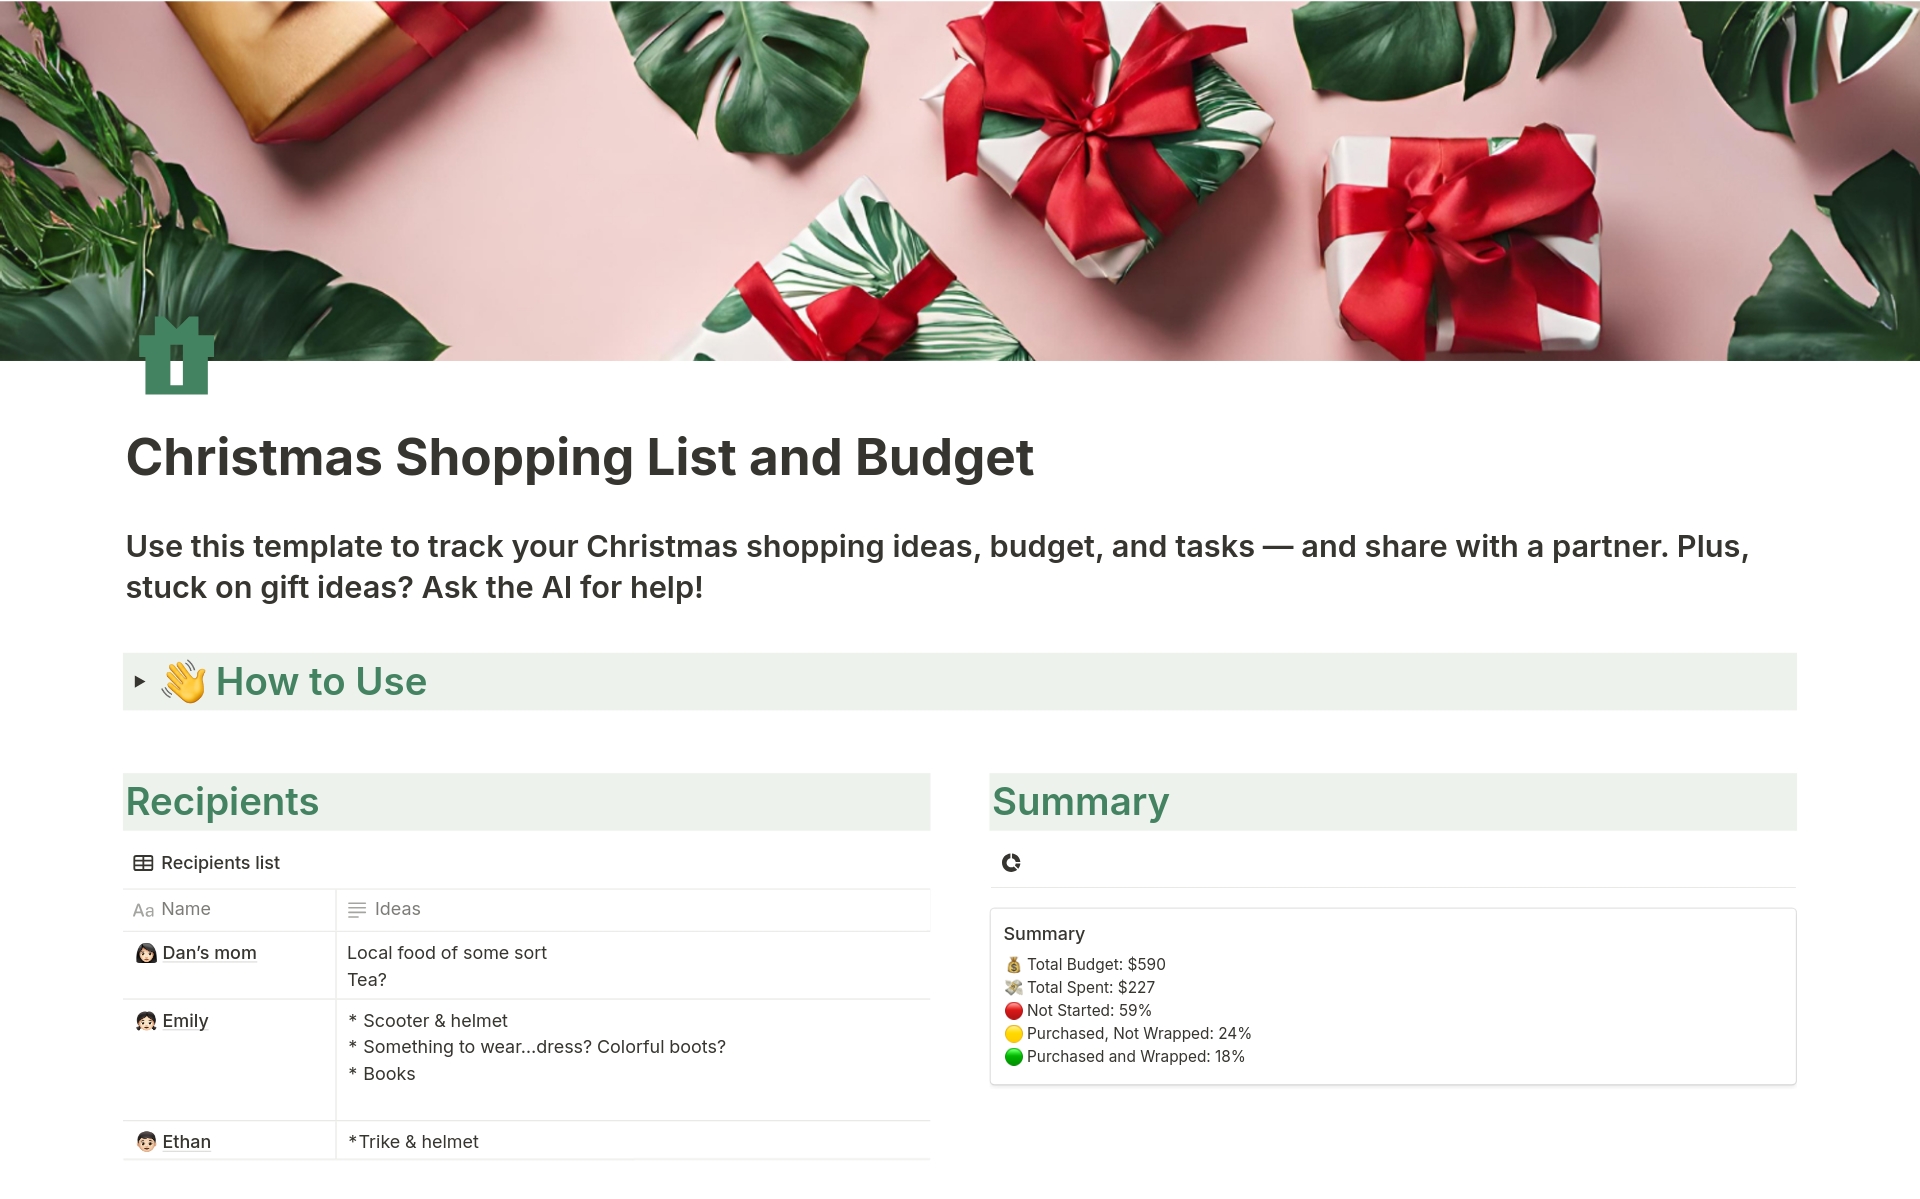 Aperçu du modèle de Christmas Shopping List and Budget